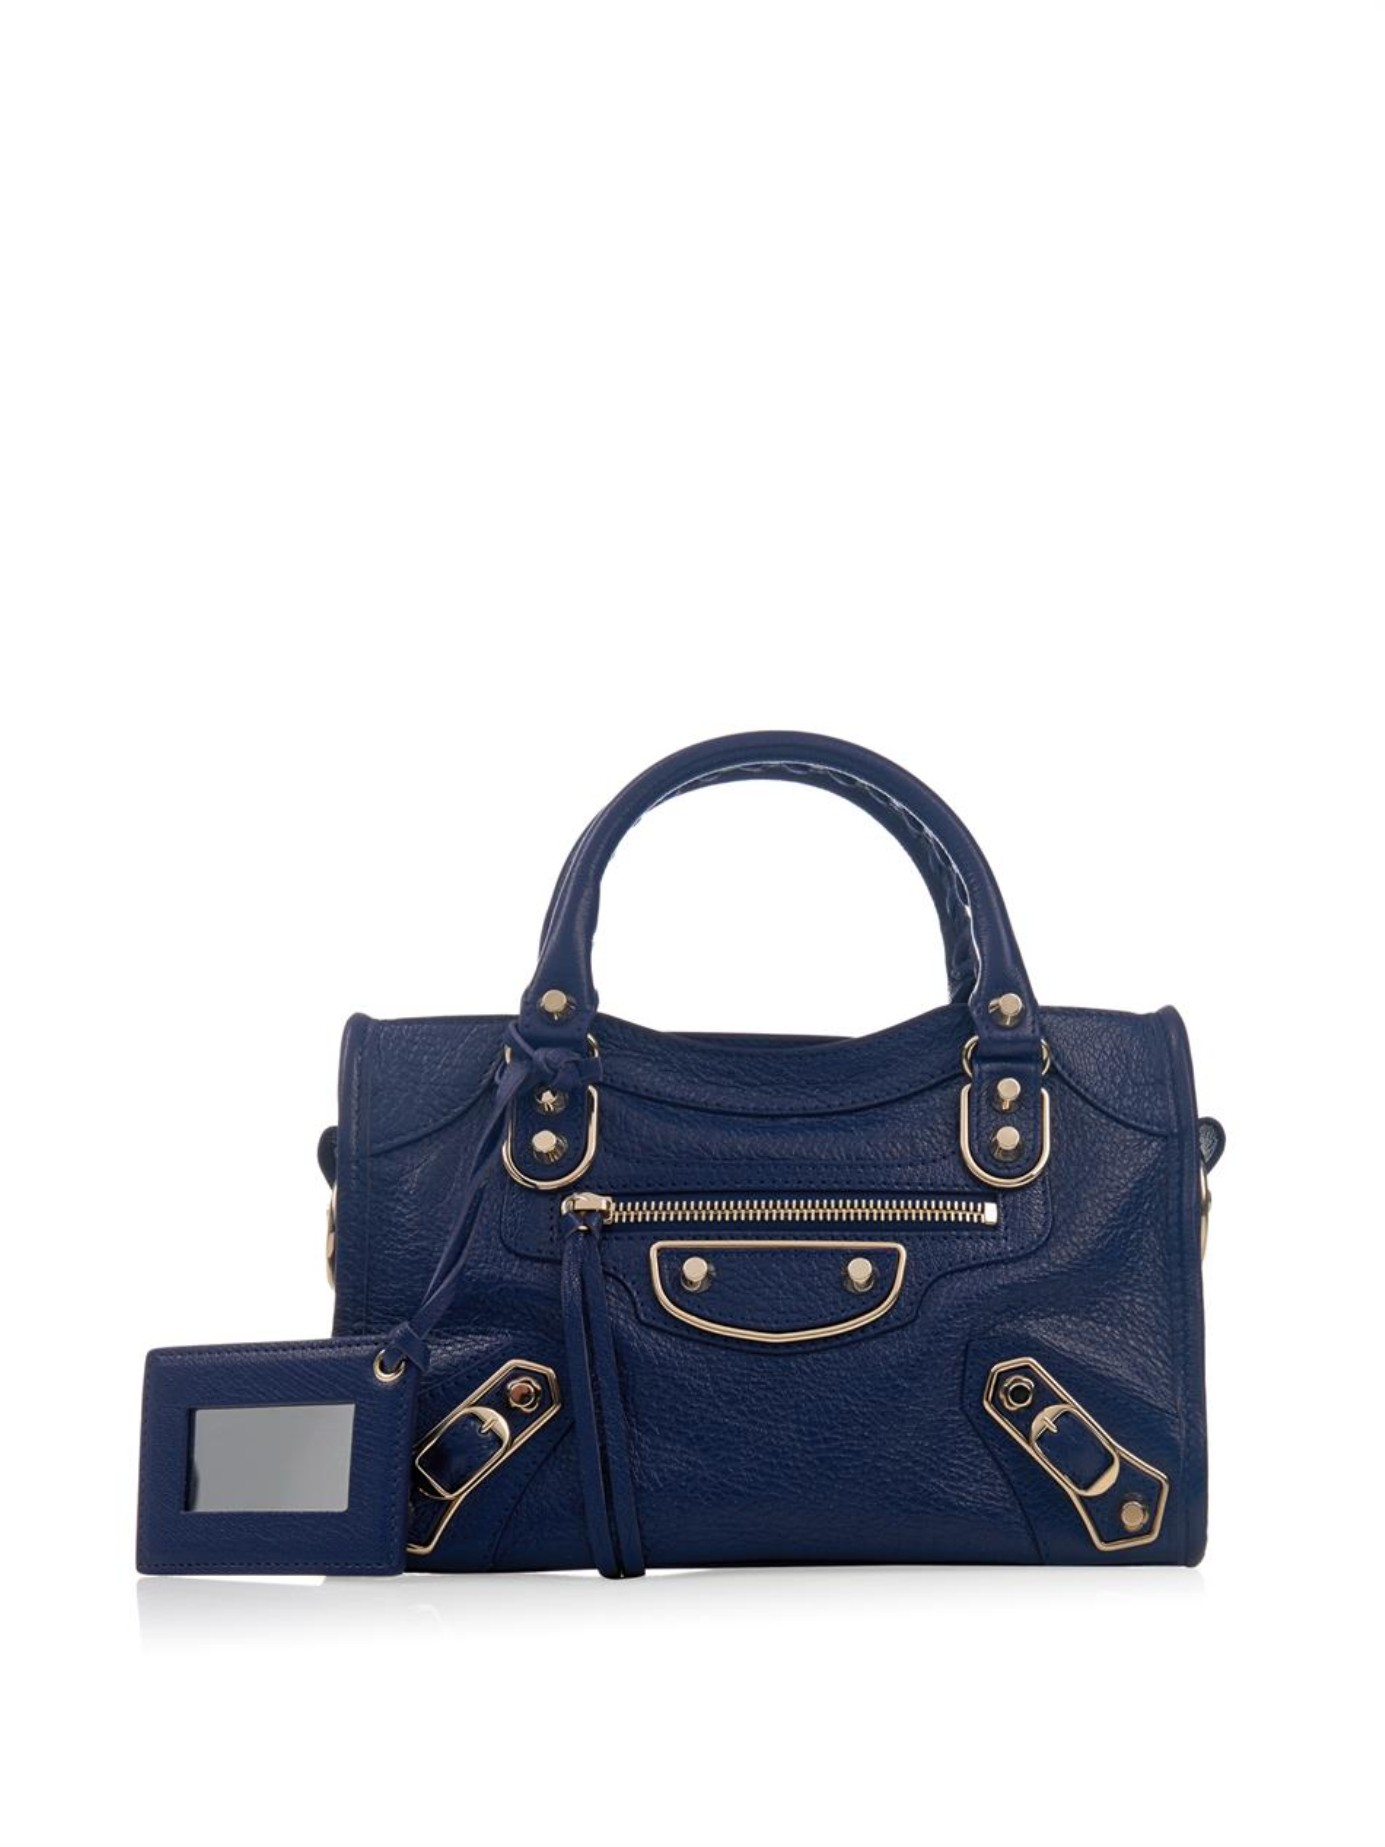 Balenciaga Classic Mini City Edge-Line Cross-Body Bag in Blue - Lyst